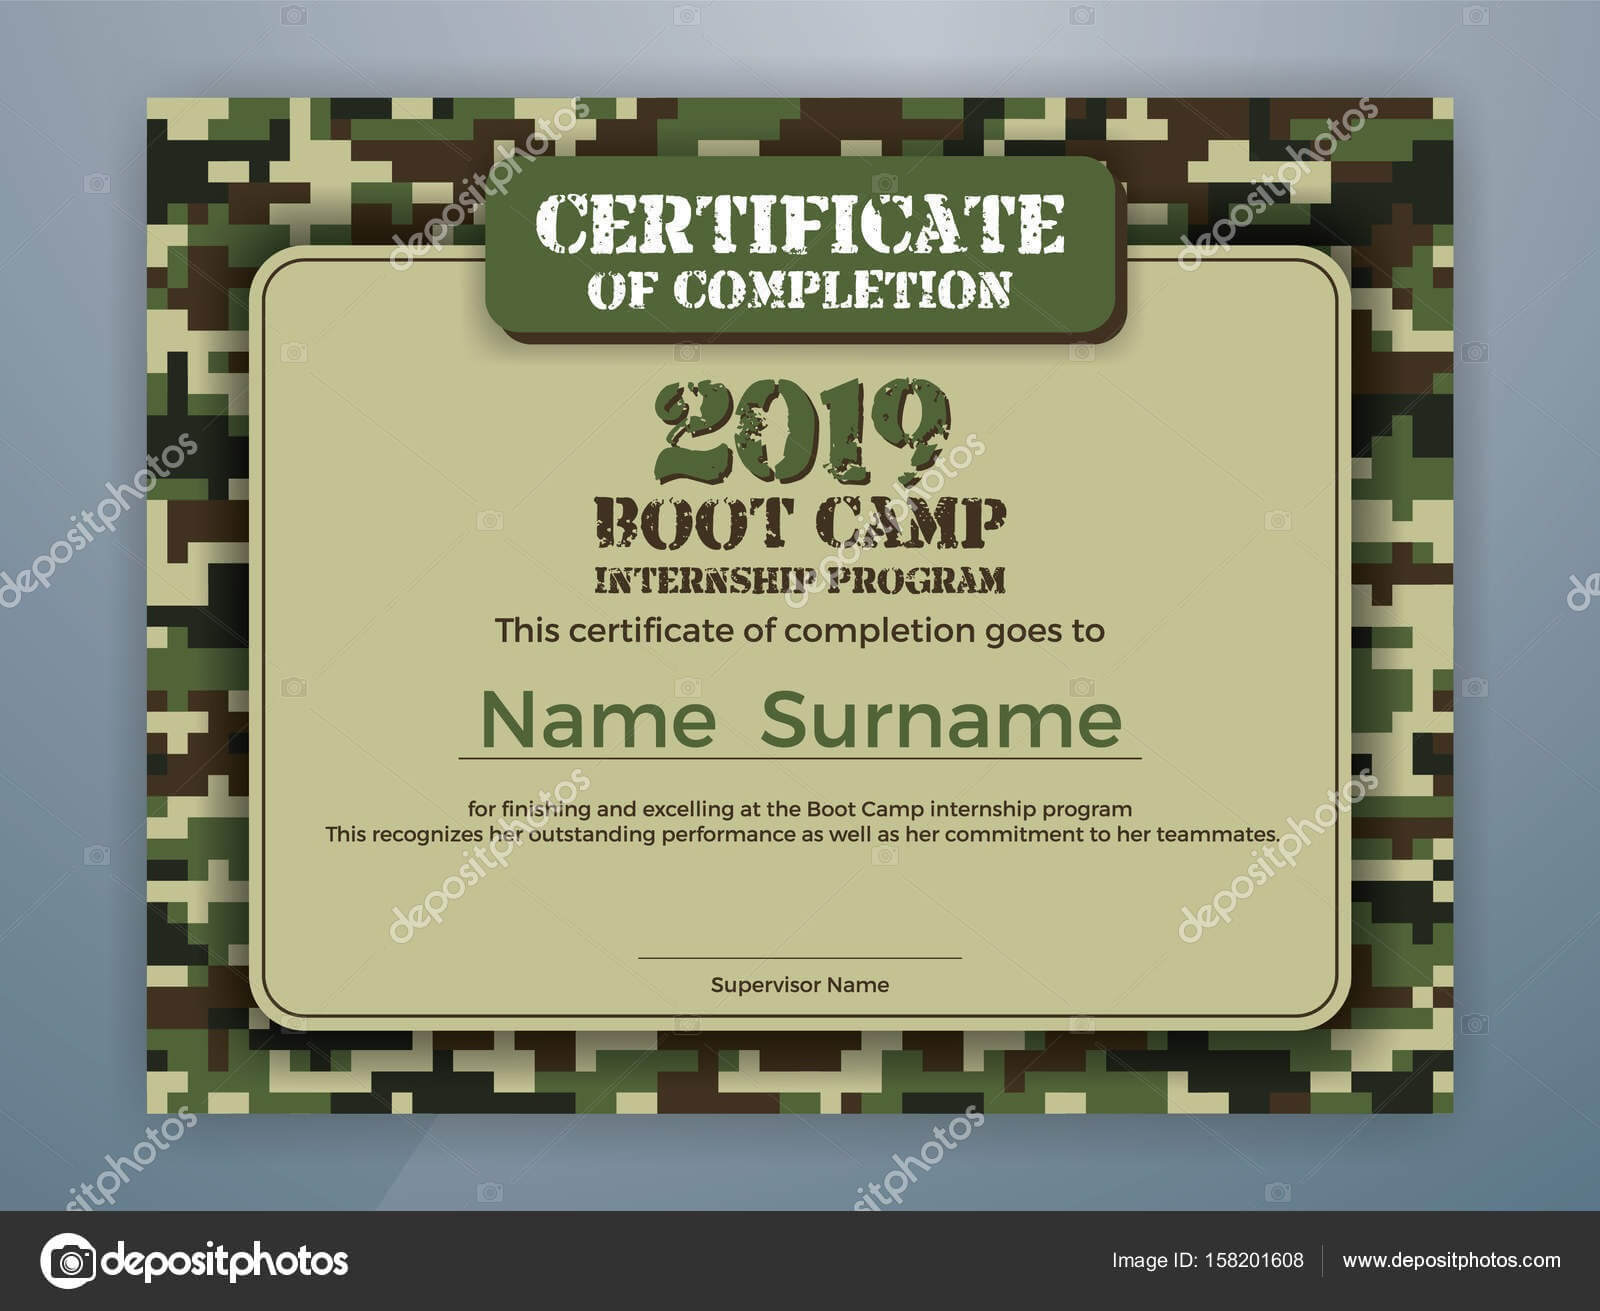 Boot Camp Certificate Template | Boot Camp Internship Intended For Boot Camp Certificate Template